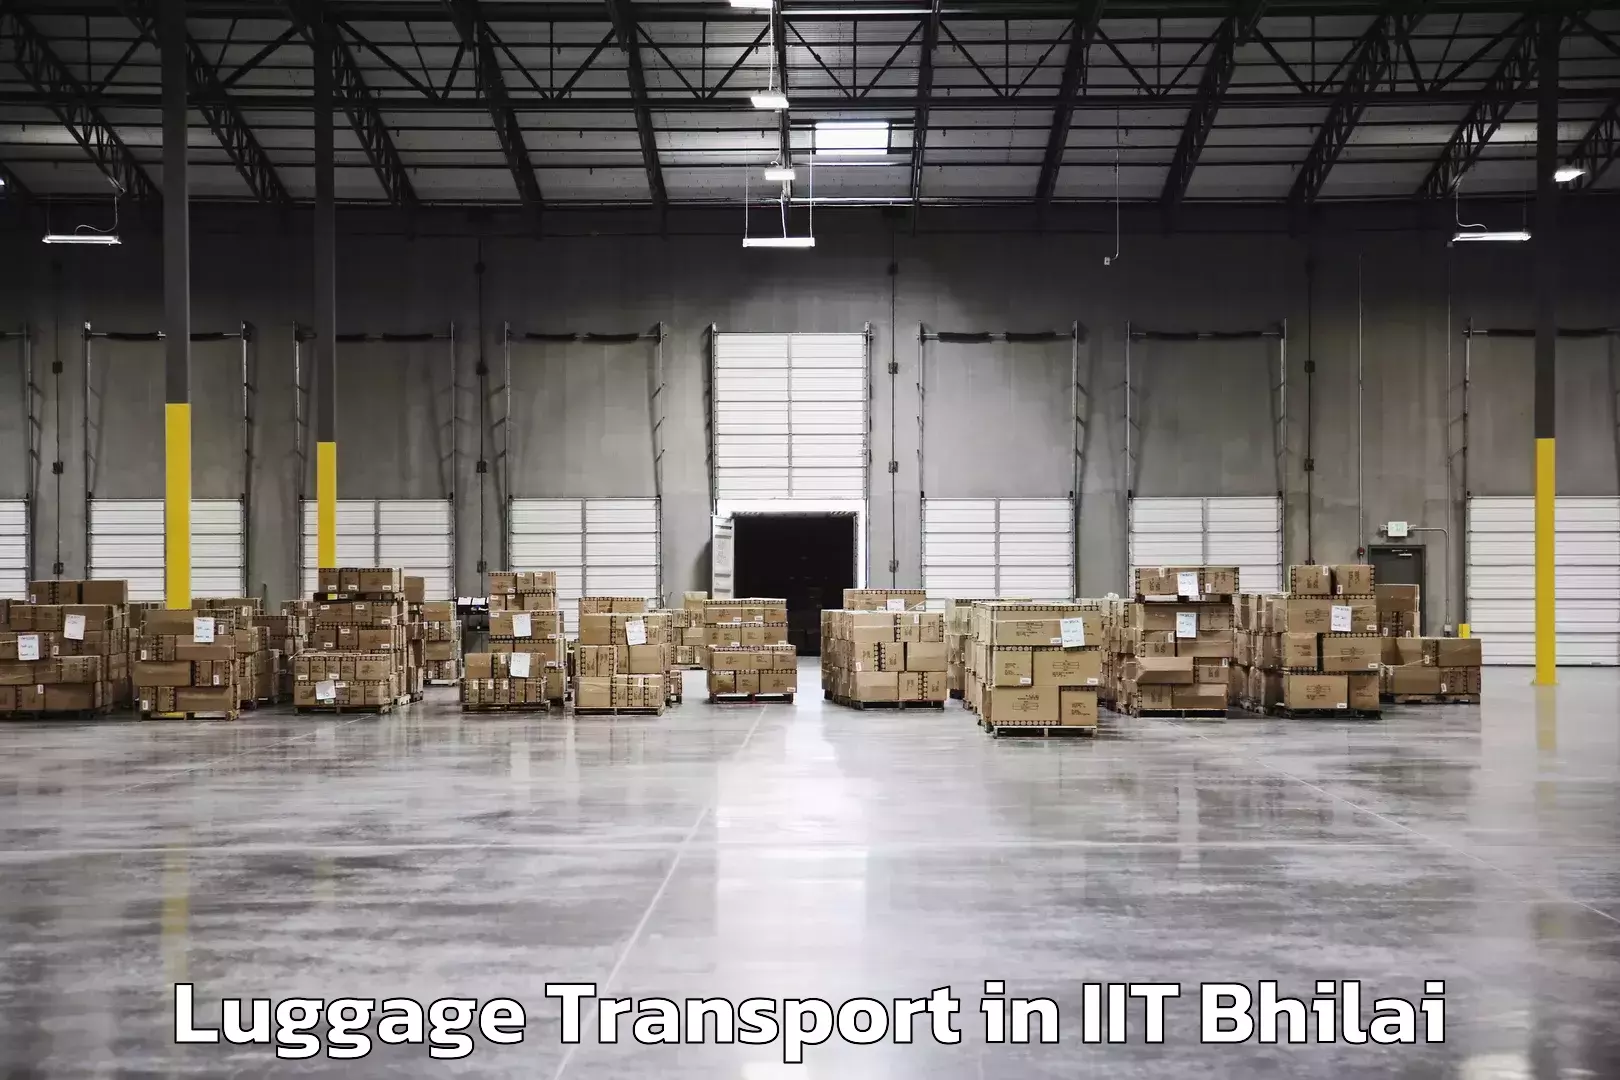 Luggage shipment strategy in IIT Bhilai